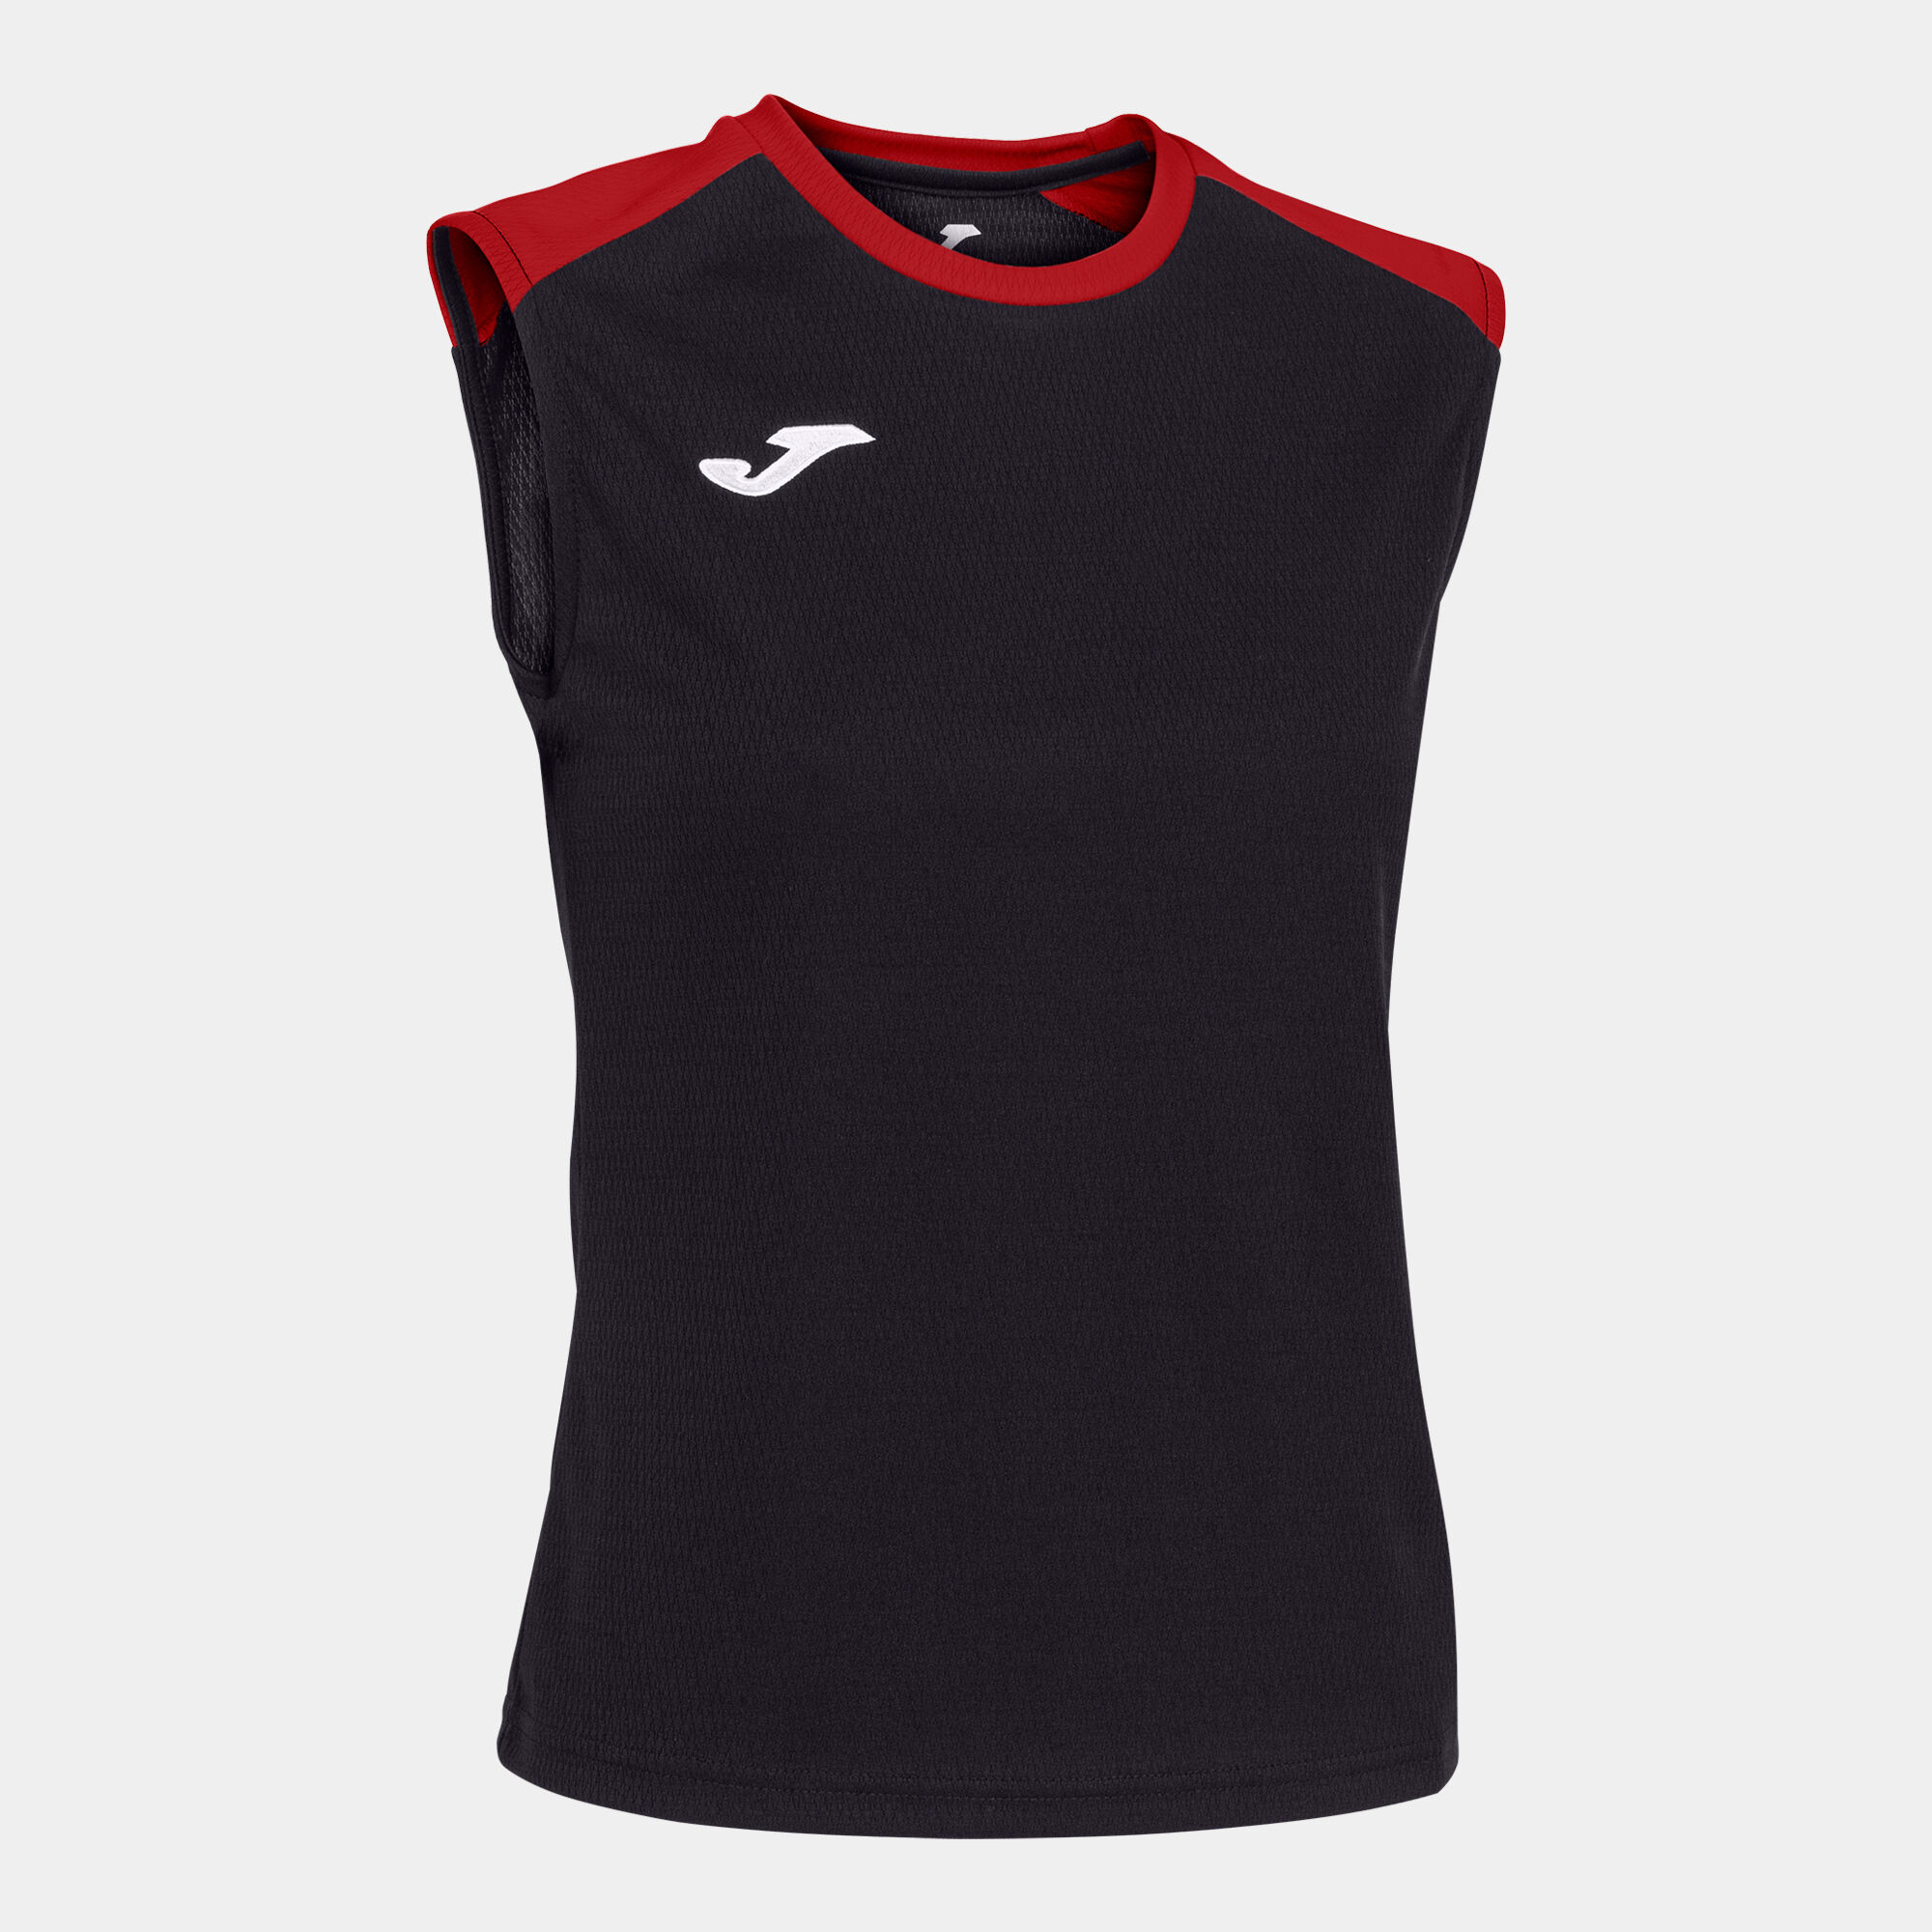 Camiseta tirantes mujer Eco Championship negro rojo